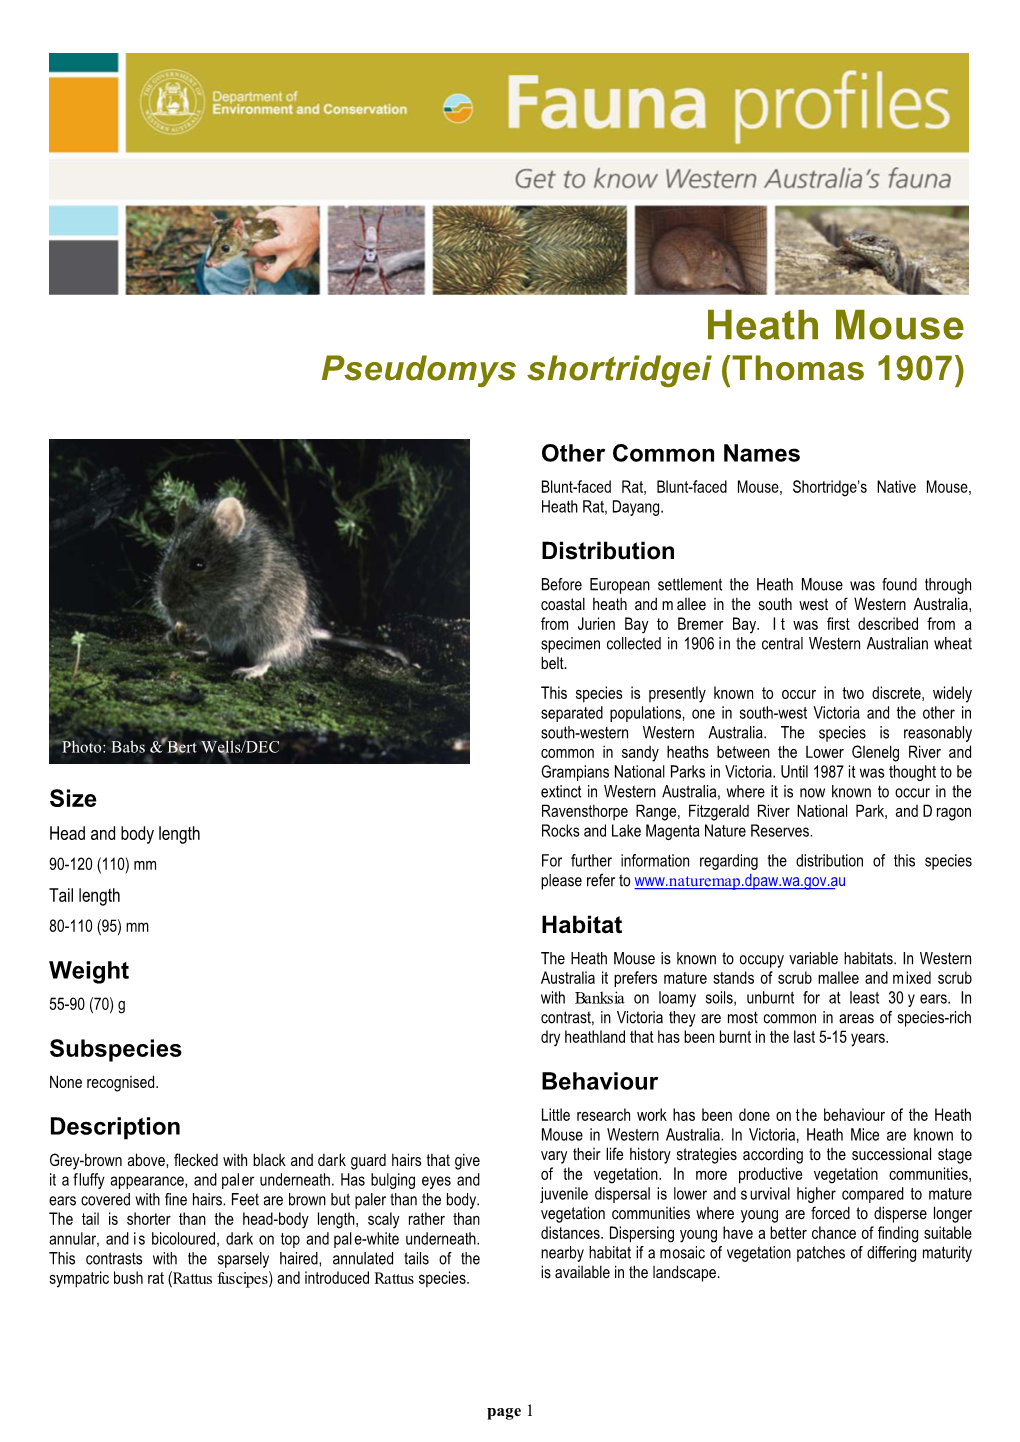 Heath Mouse Pseudomys Shortridgei (Thomas 1907)